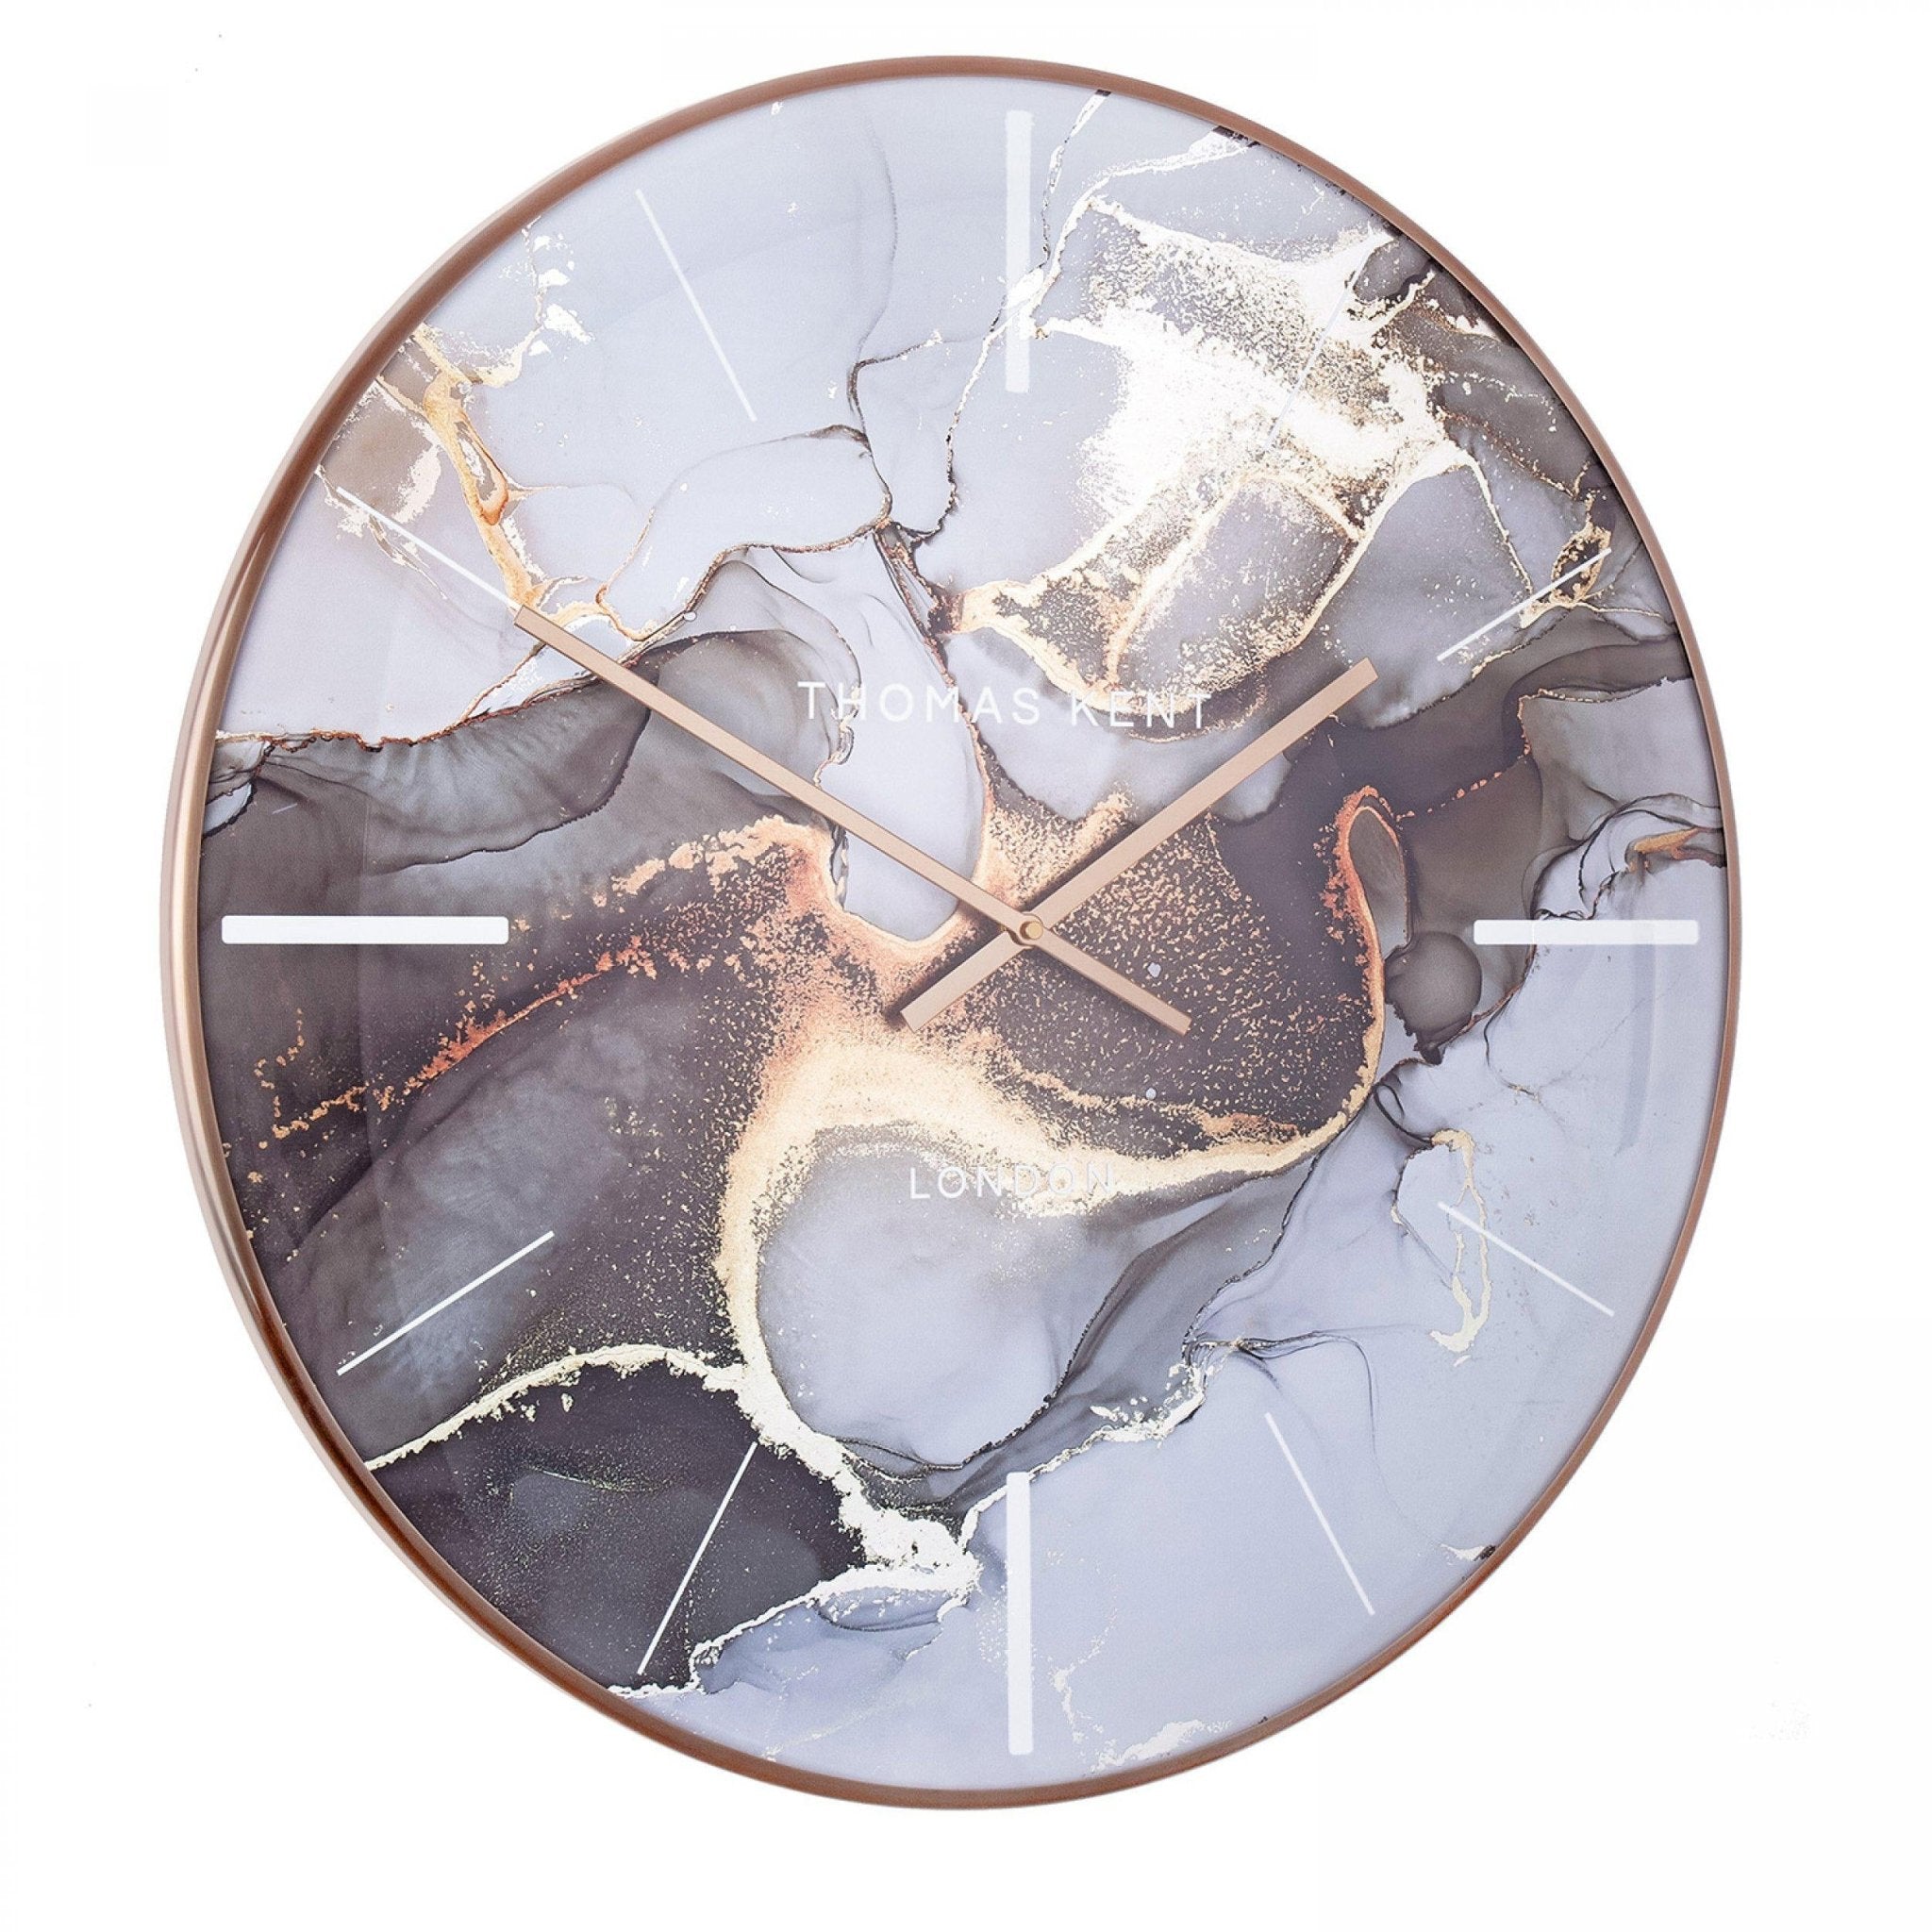 Thomas Kent Oyster Grand Clock Copper (66cm/26") - Duck Barn Interiors